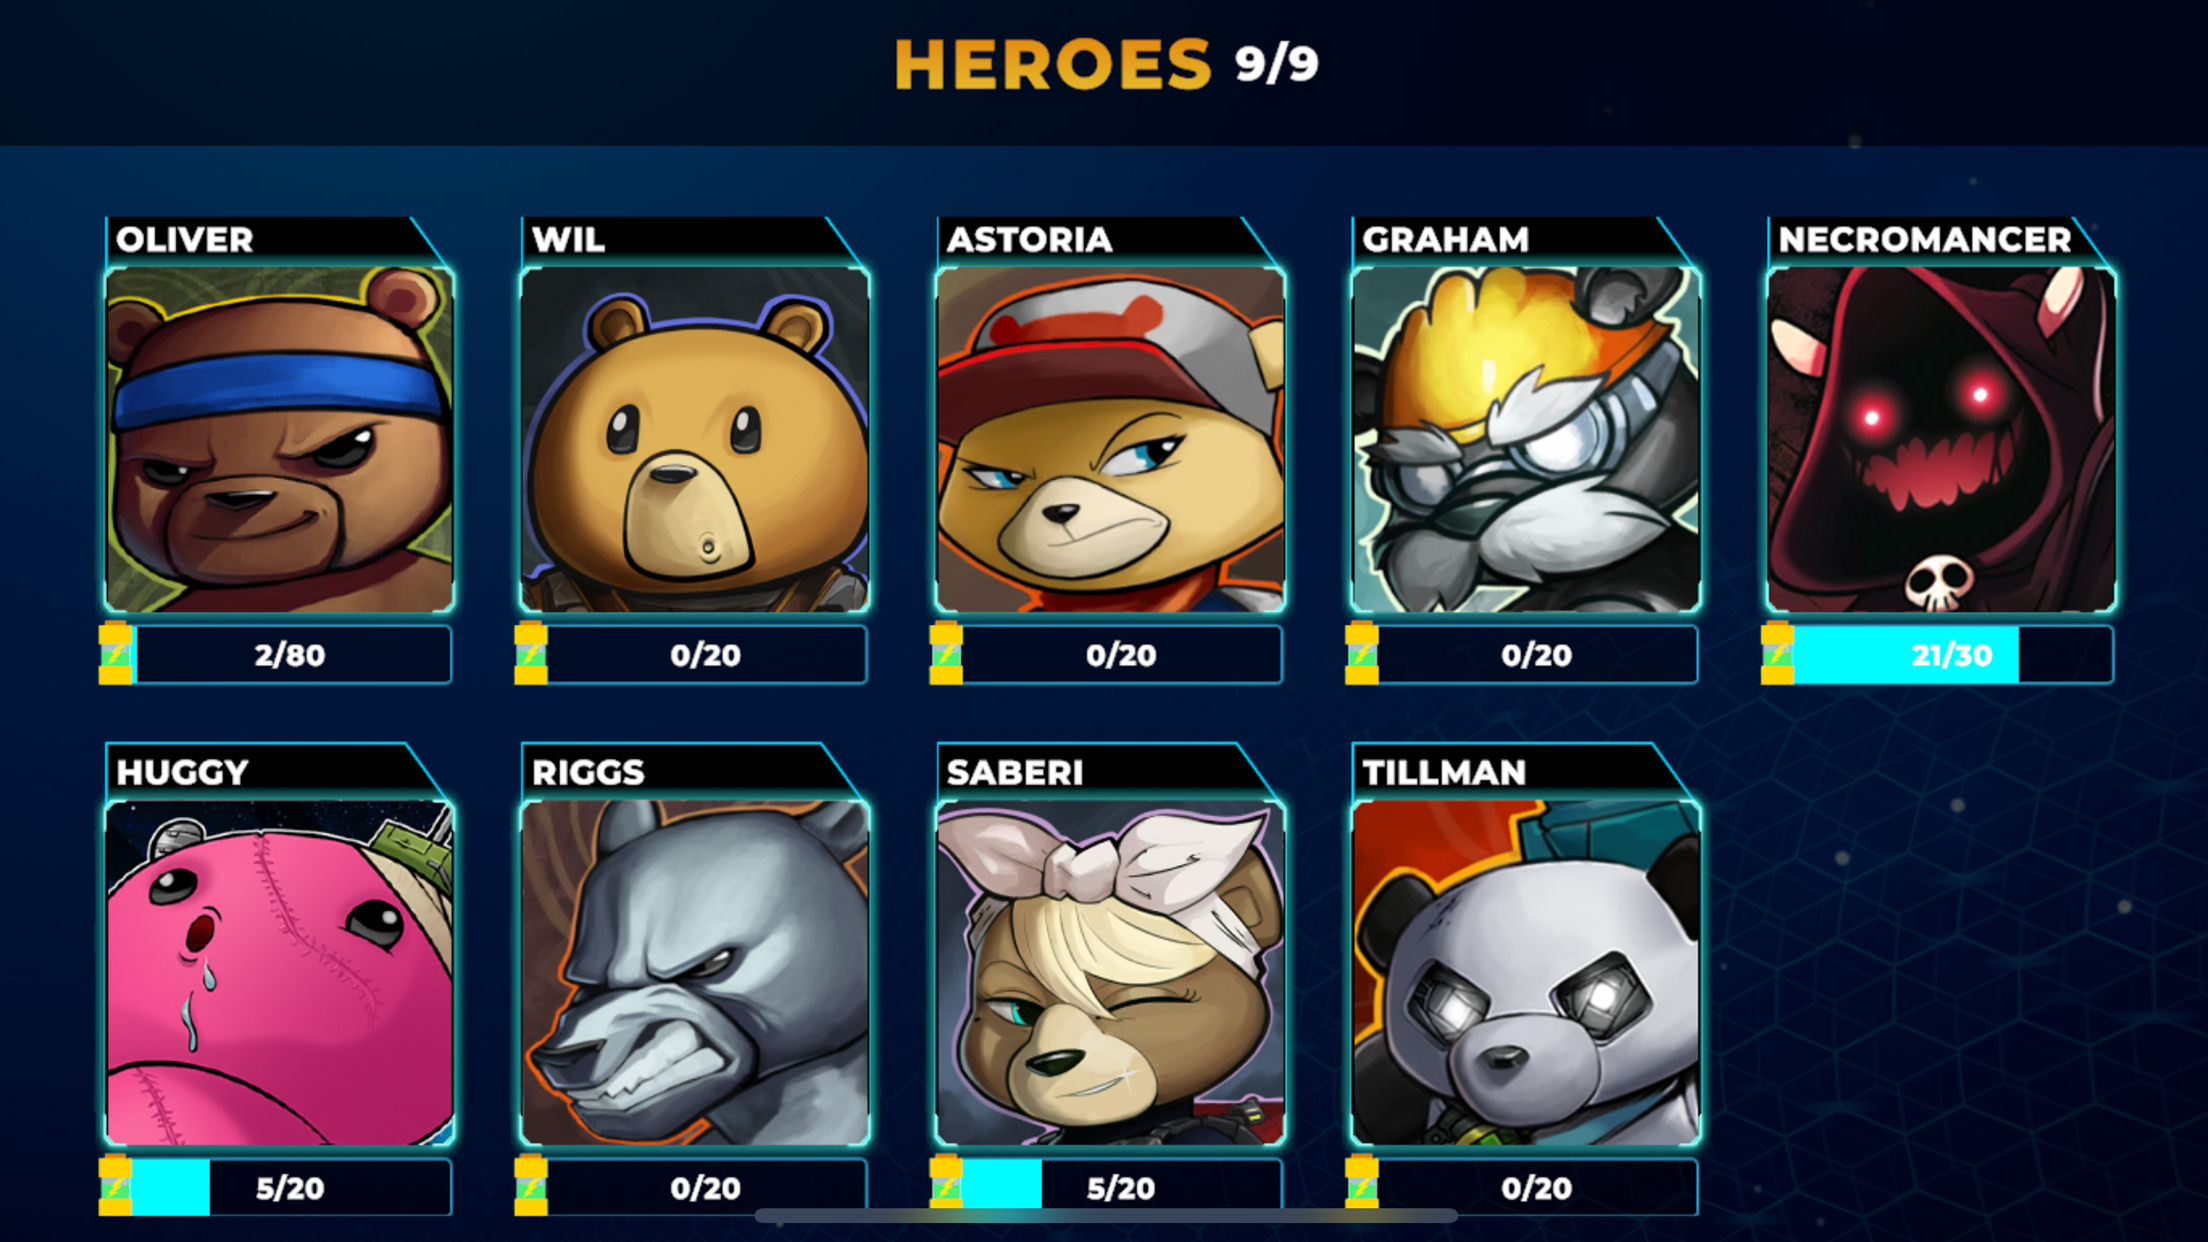 BATTLE BEARS HEROES screenshot game